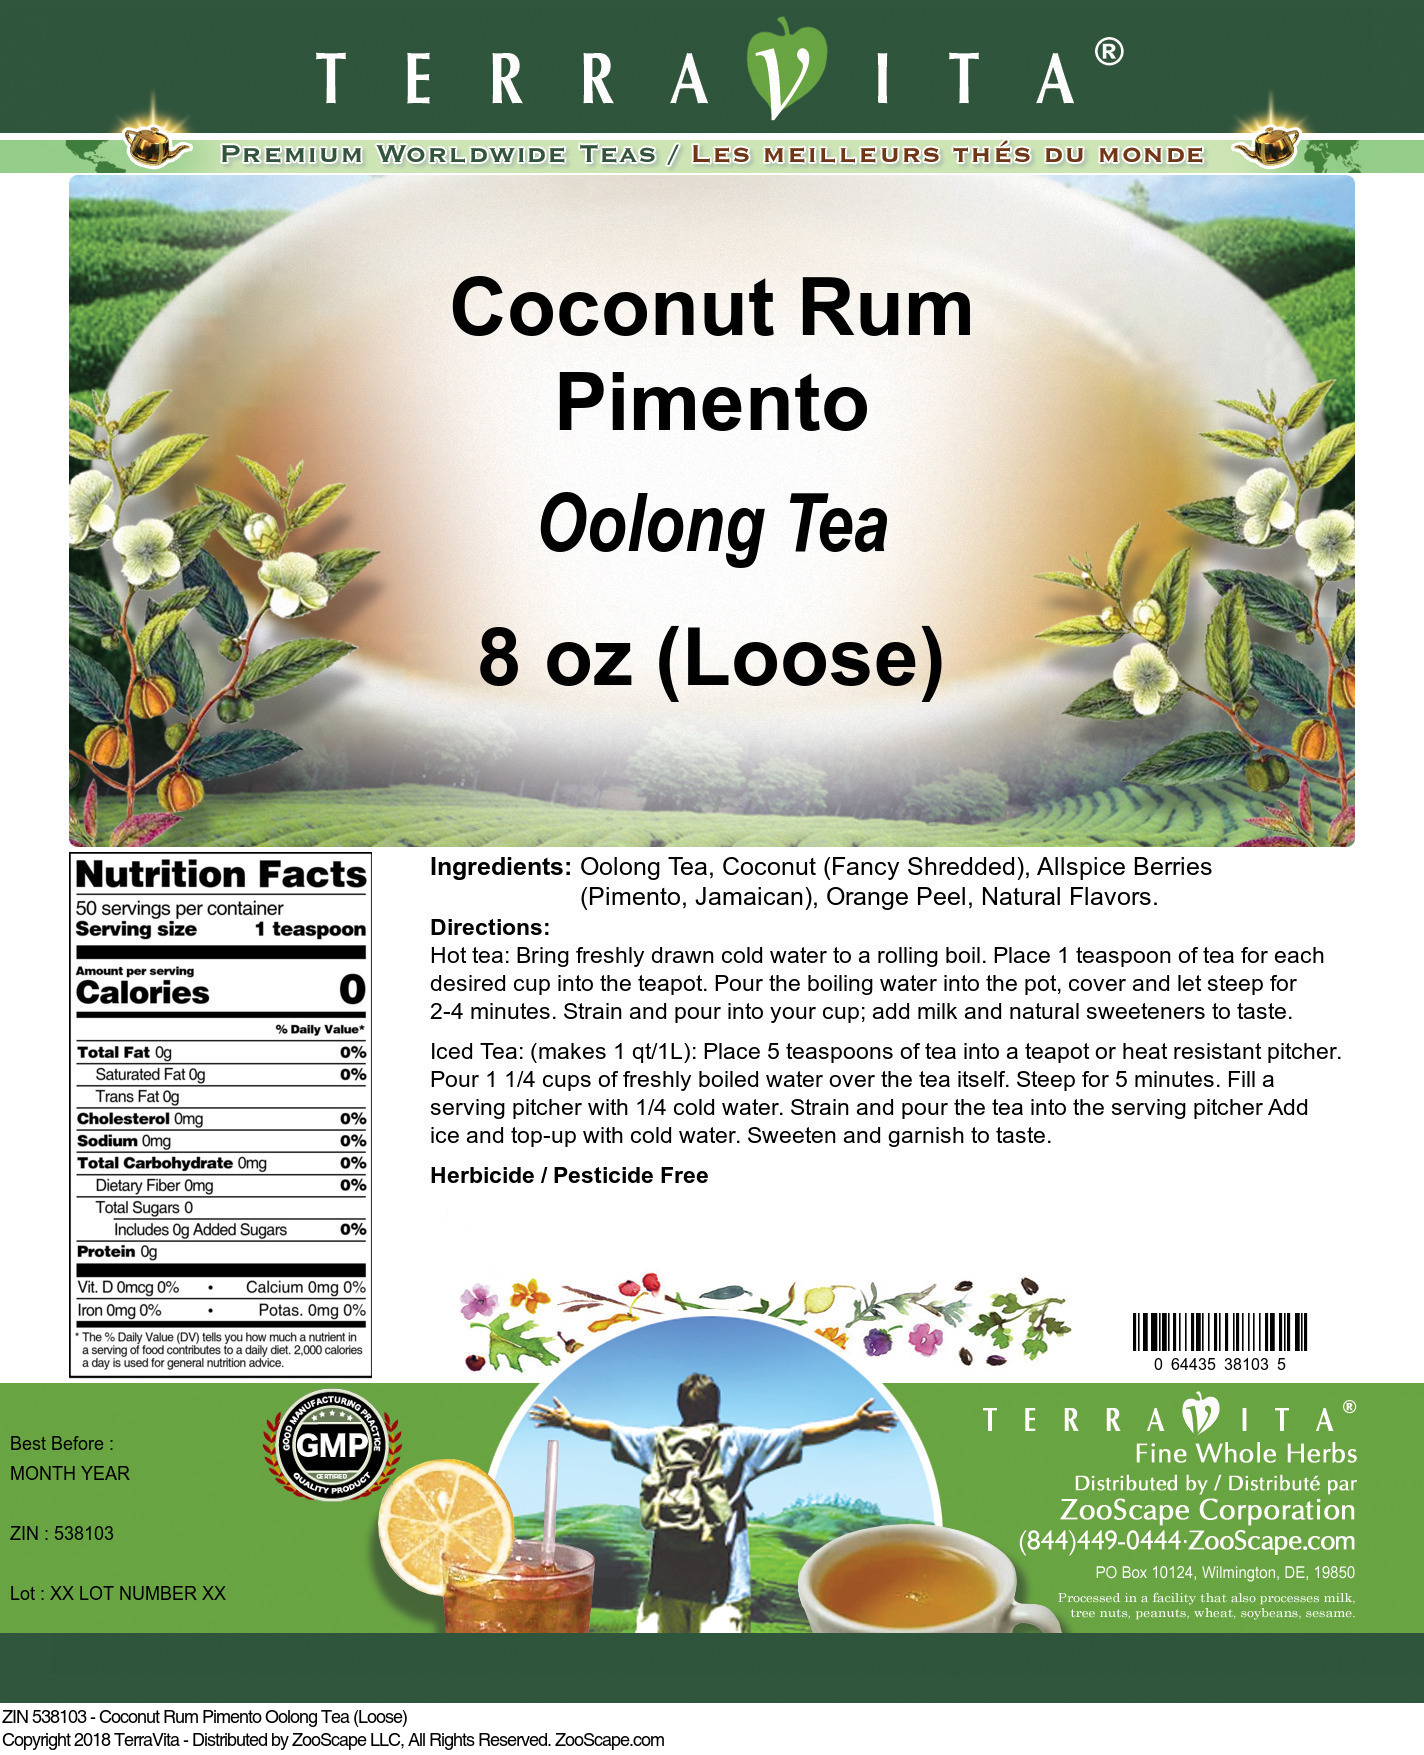 Coconut Rum Pimento Oolong Tea (Loose) - Label